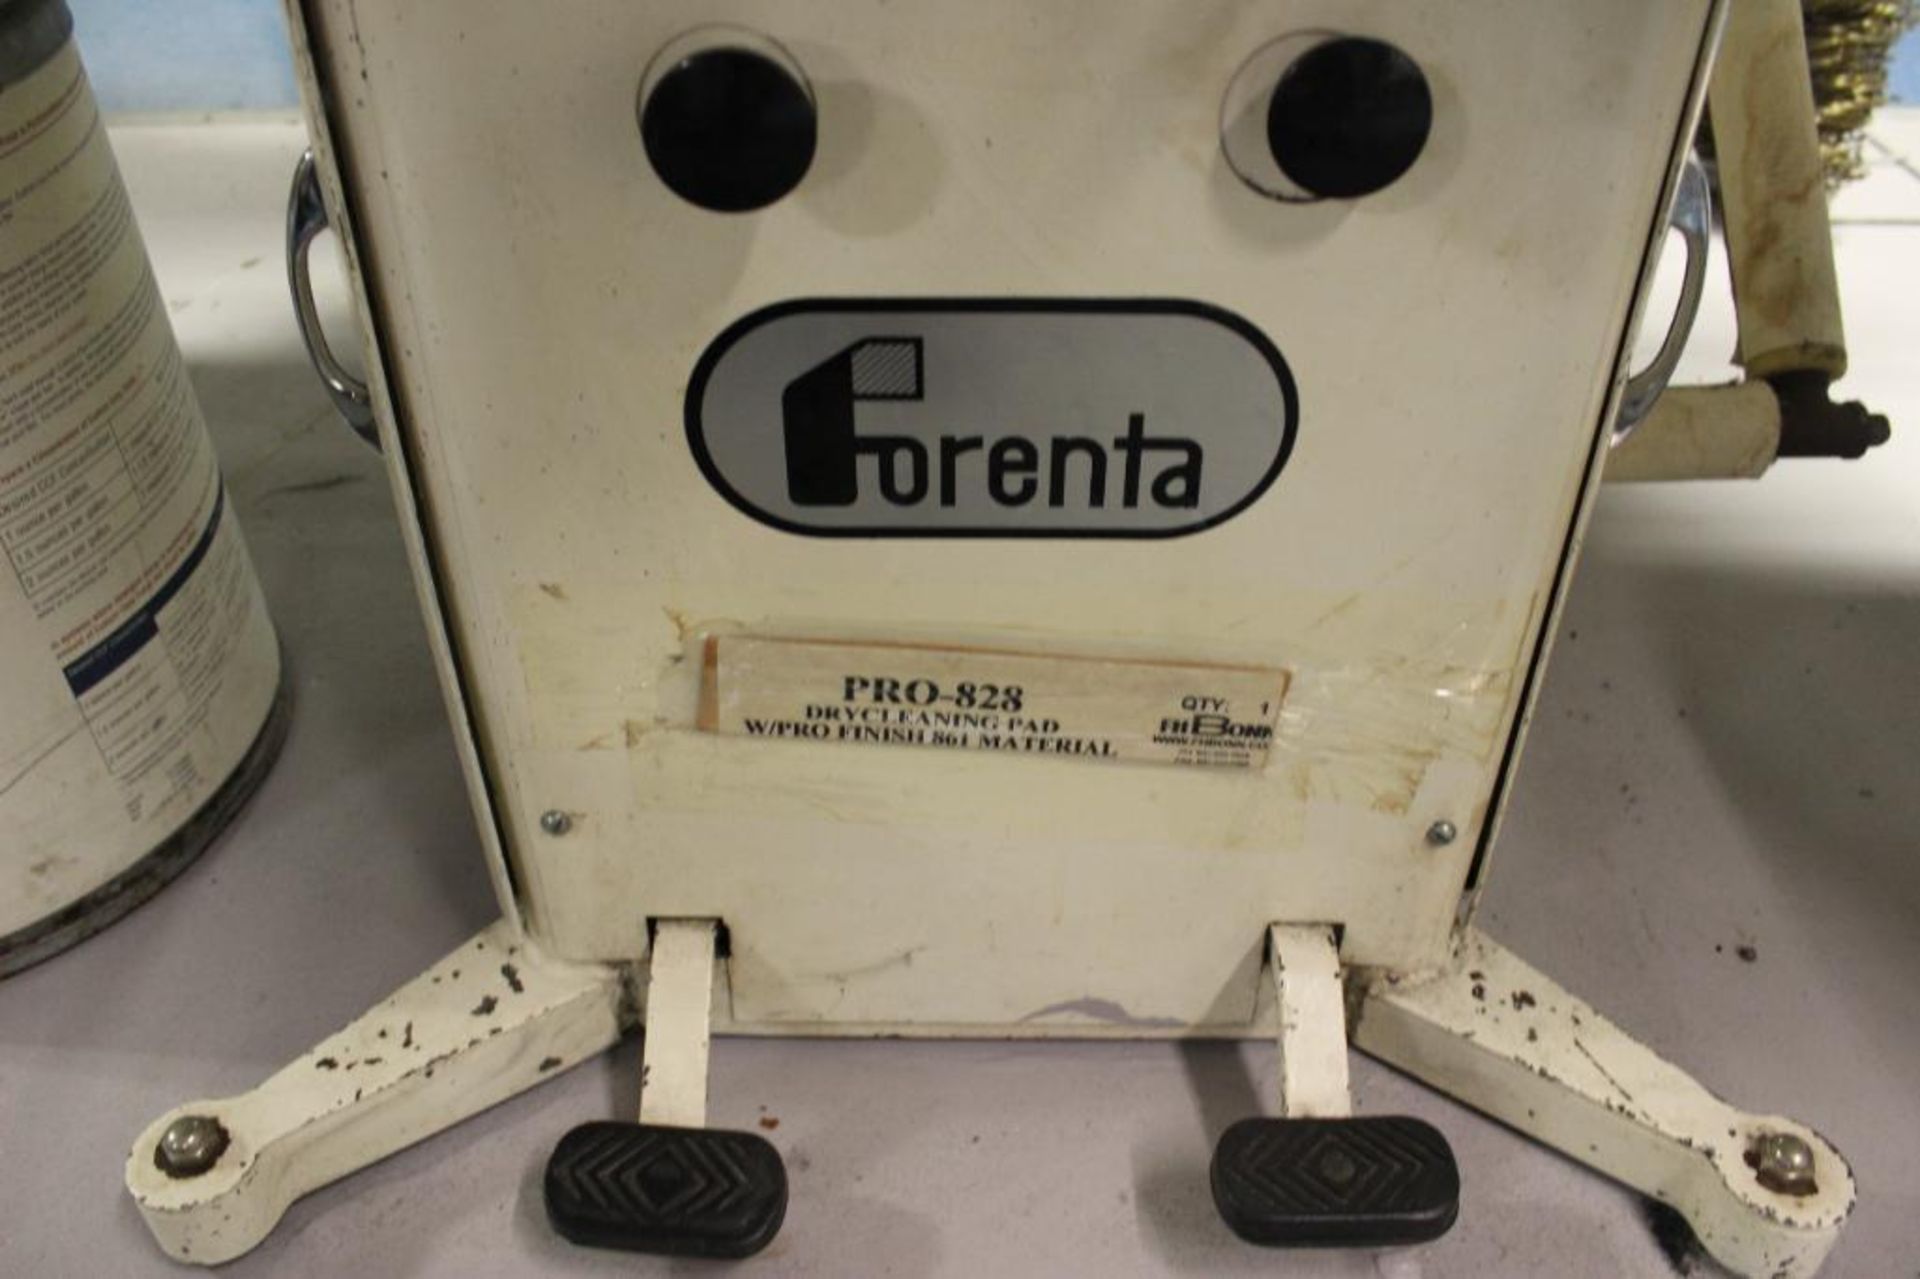 Forenta steam pressing station - Image 2 of 6